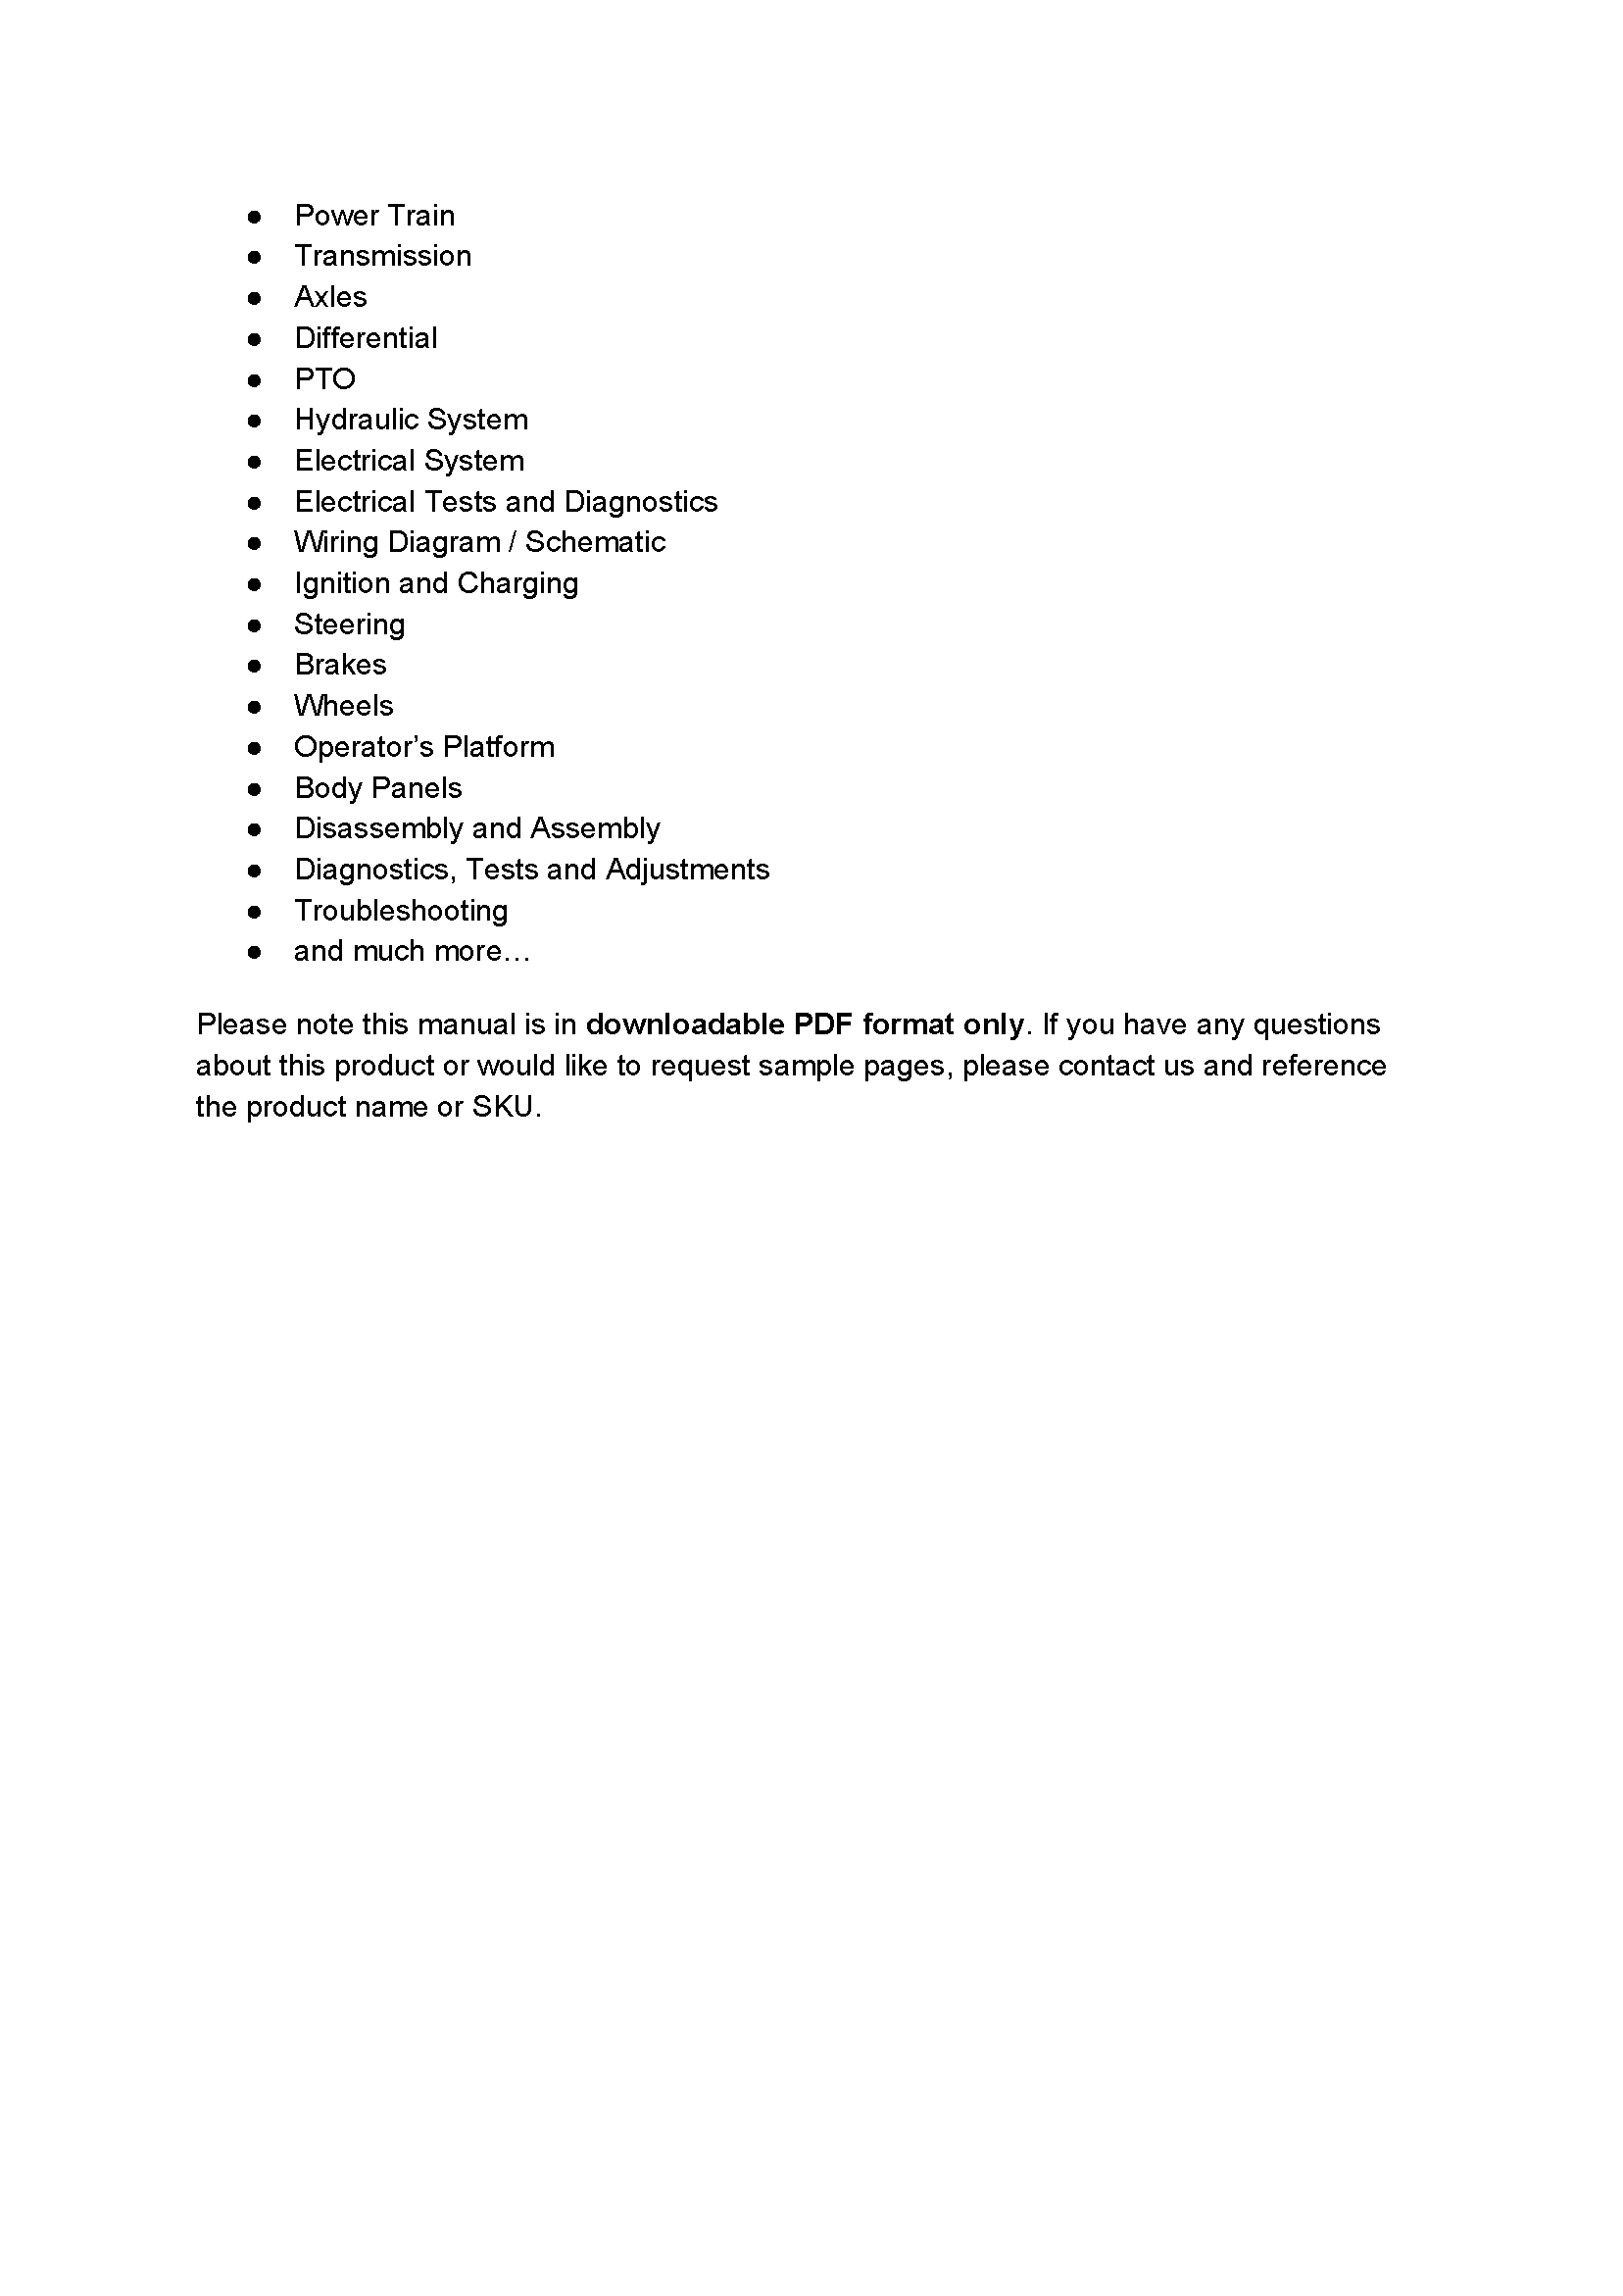 John Deere 4930 Self-Propelled Sprayer manual pdf